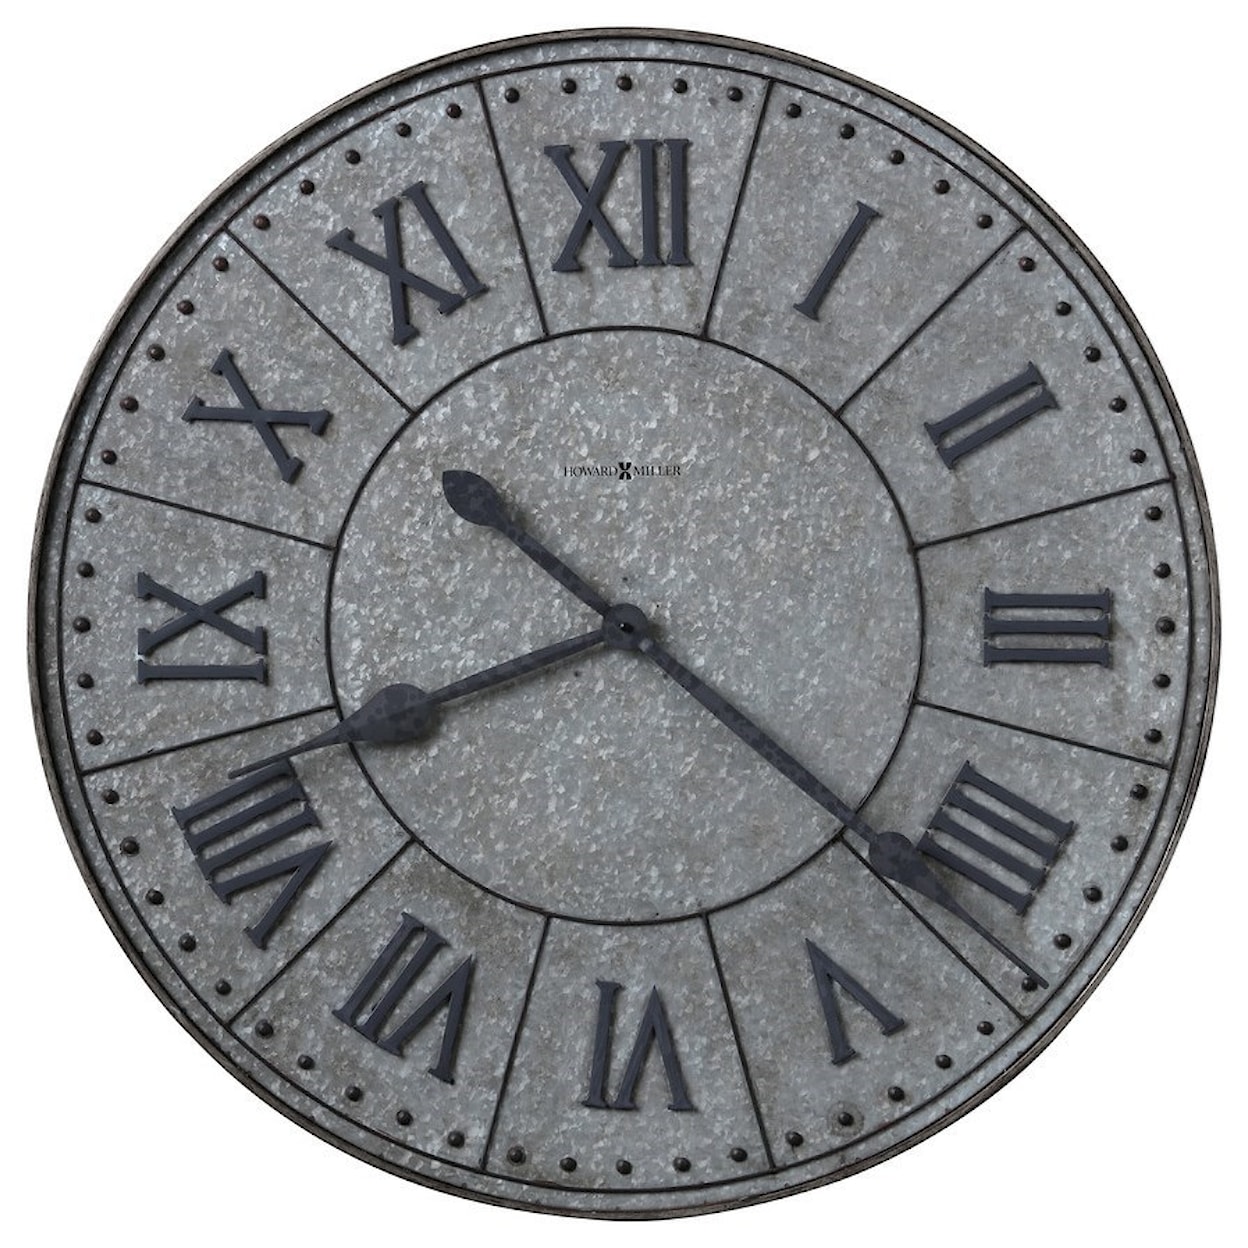 Howard Miller Wall Clocks Manzine Wall Clock